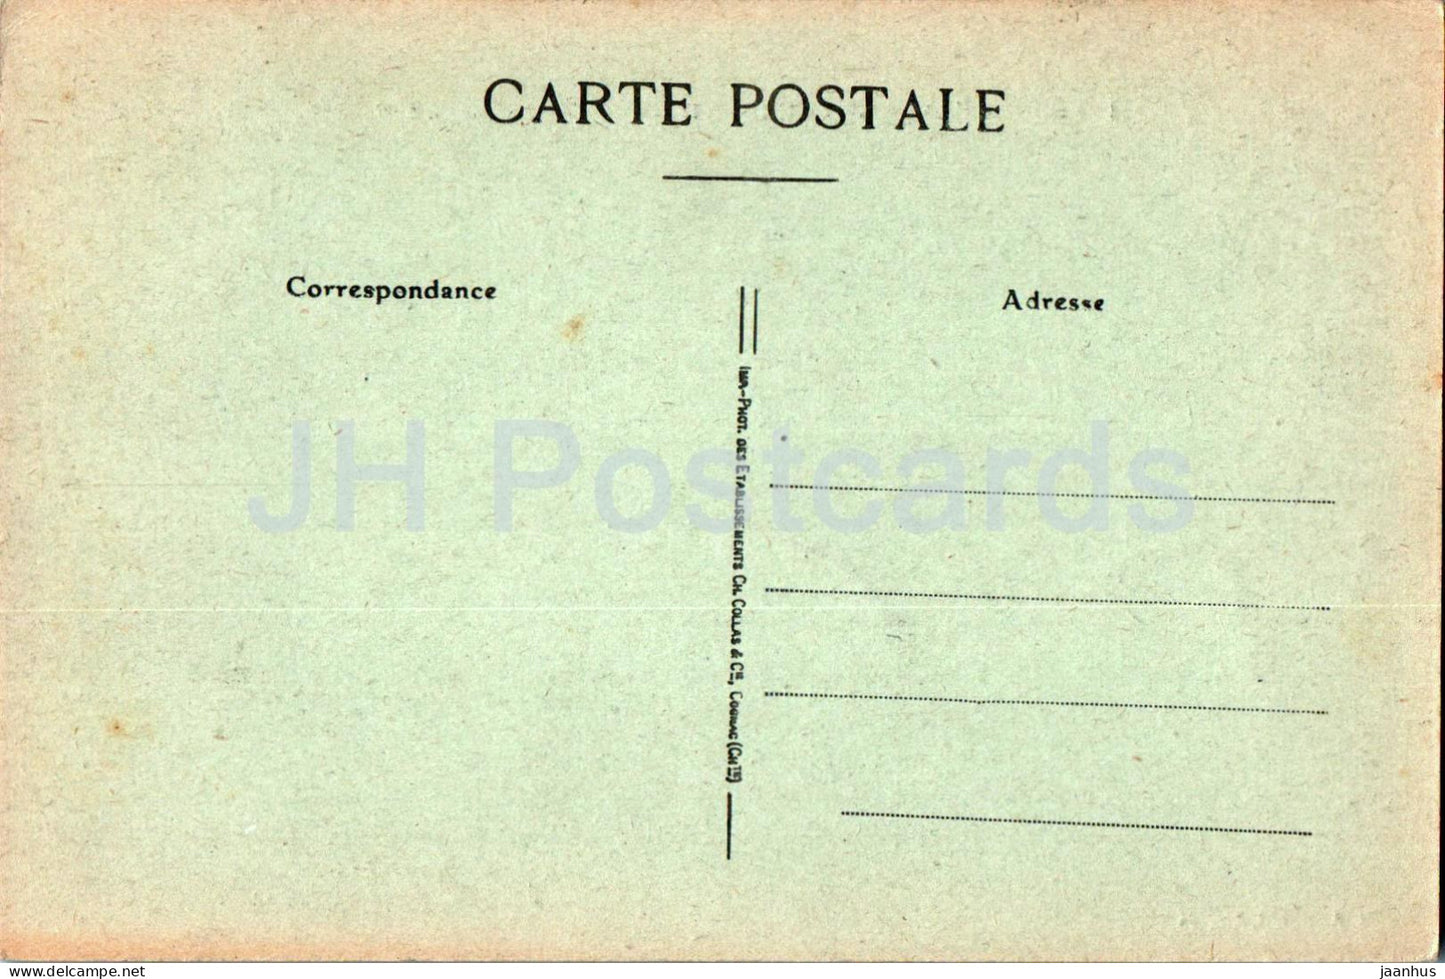 Environs d'Angers - Behuard - La Vue Generale - 1 - alte Postkarte - Frankreich - unbenutzt 